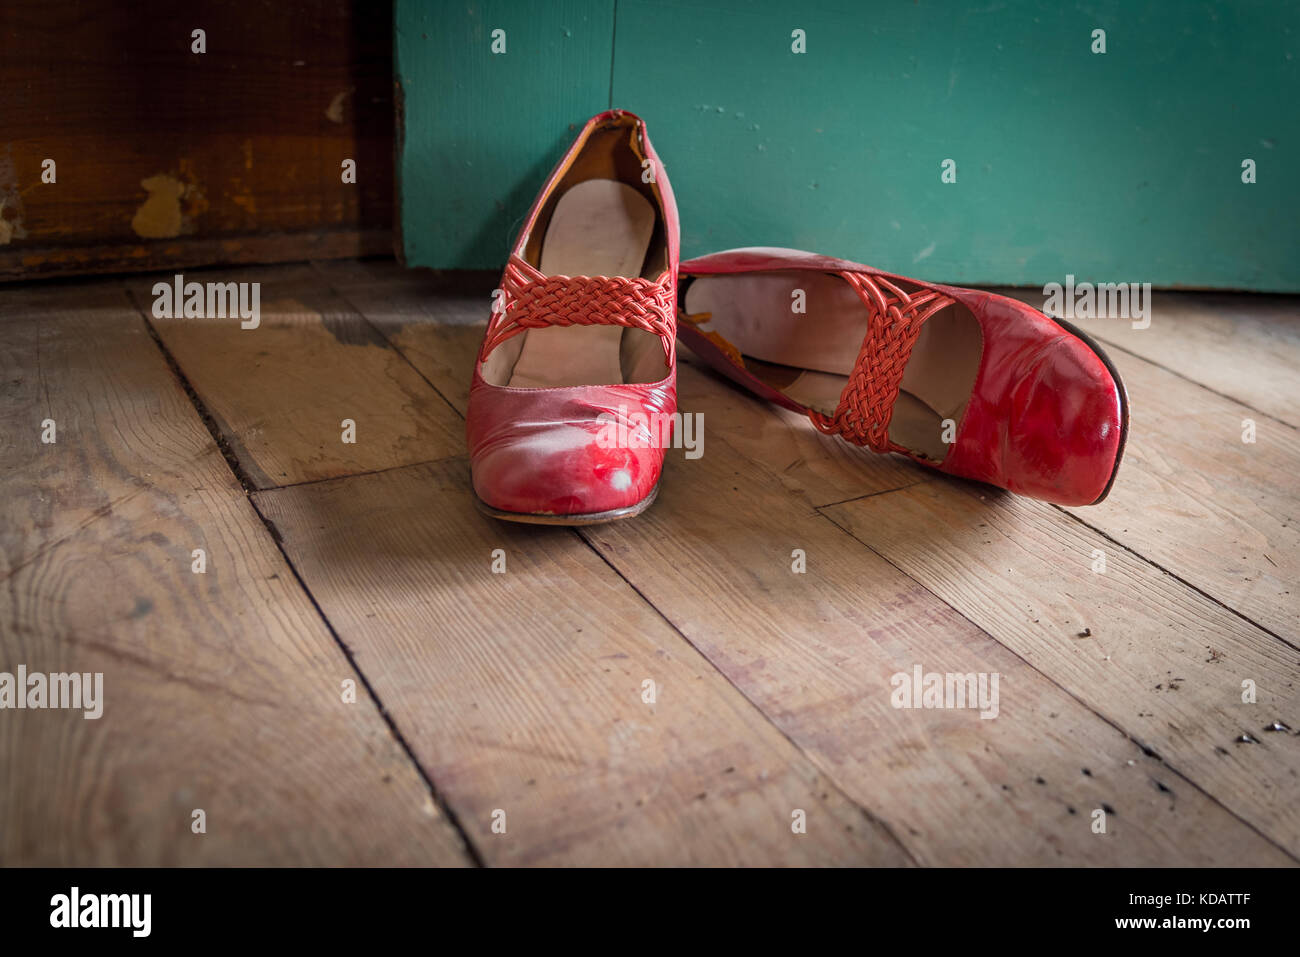 Worn red women's dress shoes on wooden floor Stock Photo